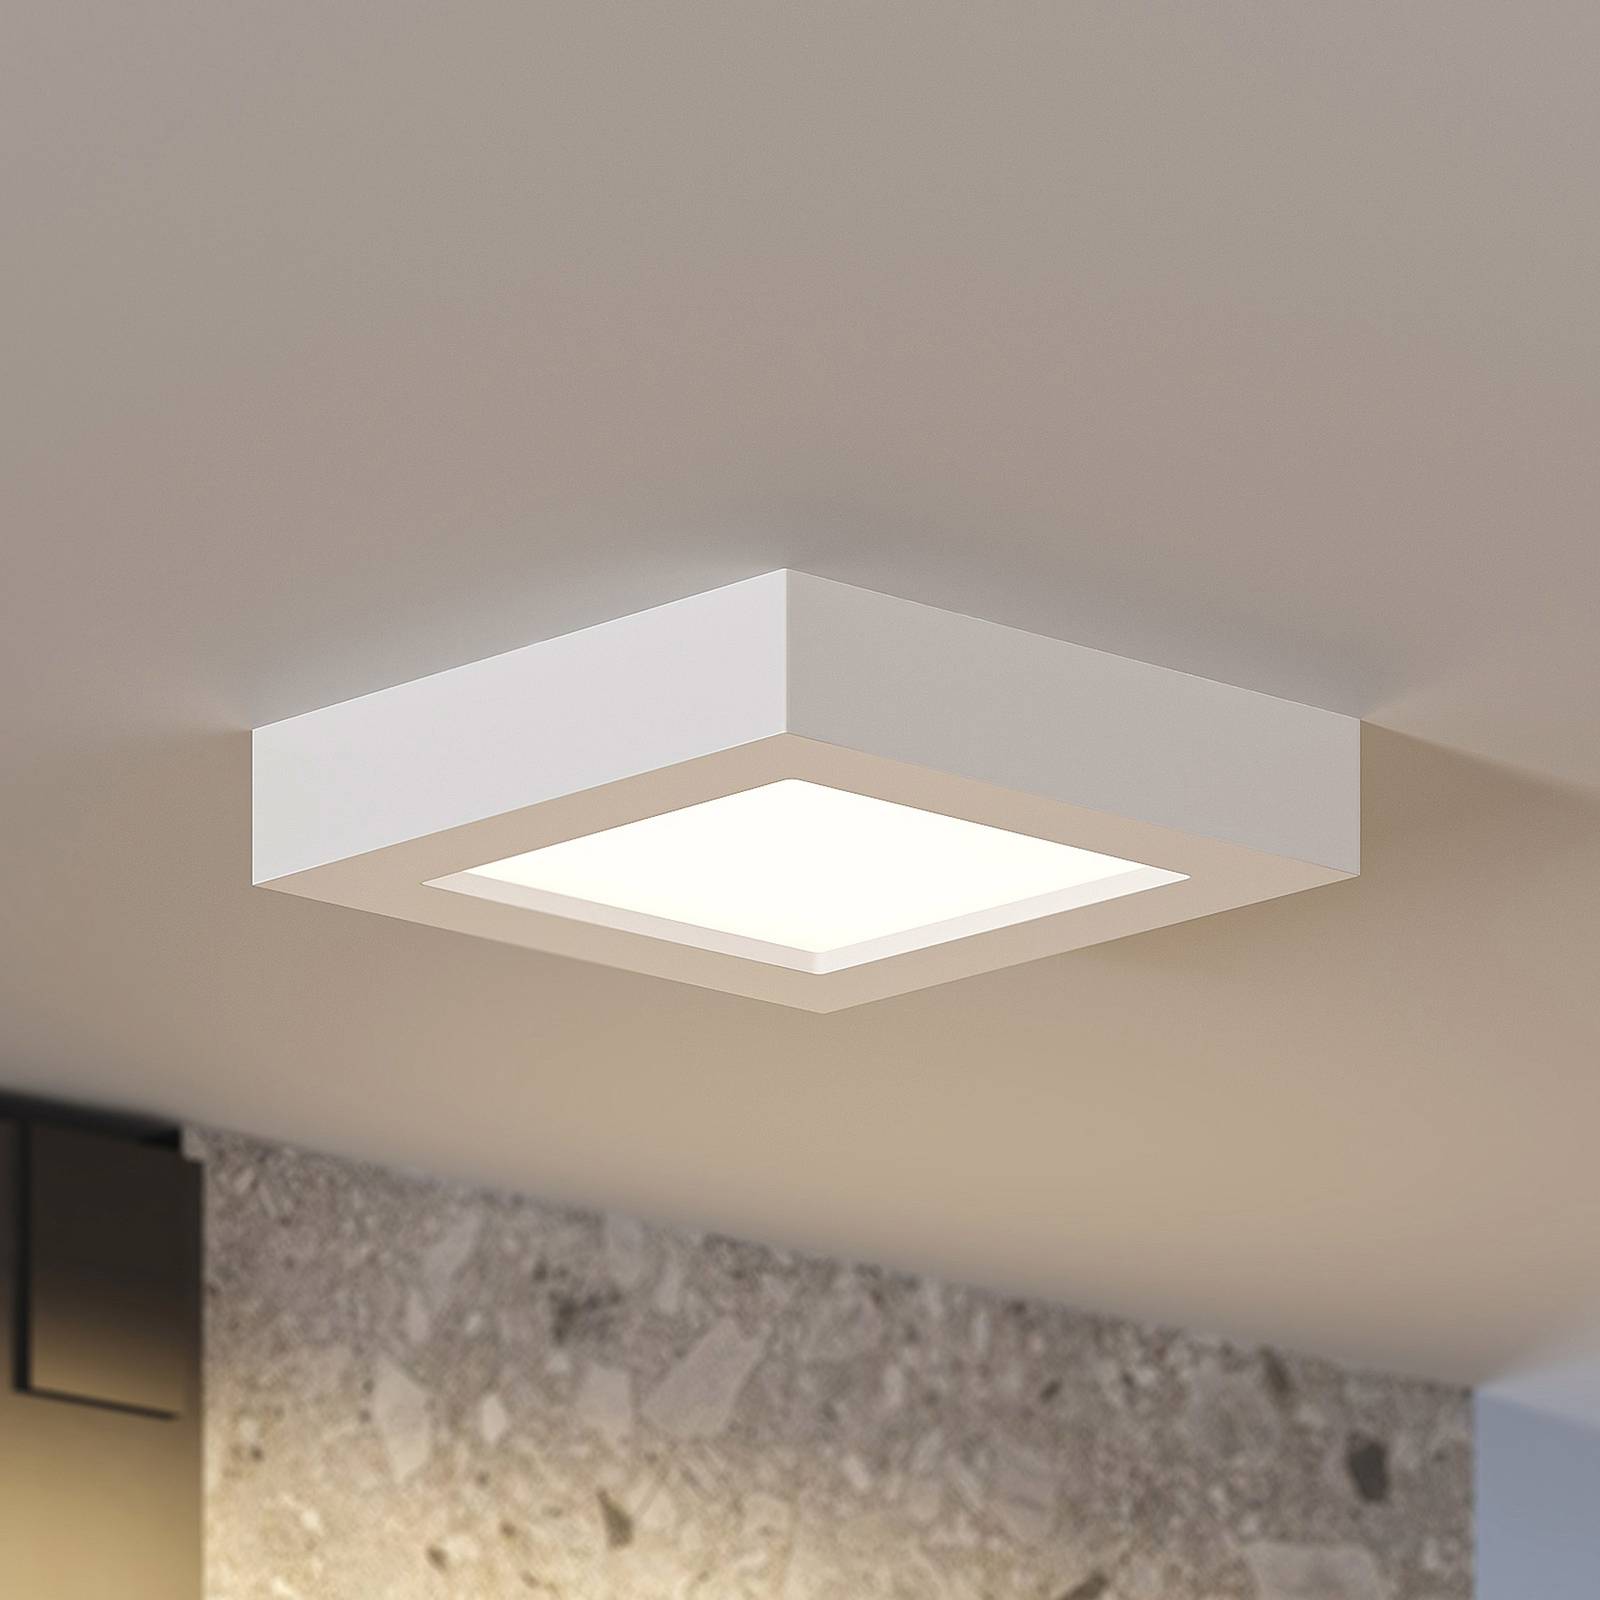 Image of Prios Alette plafonnier LED, blanc, 17,2 cm 4251911707656